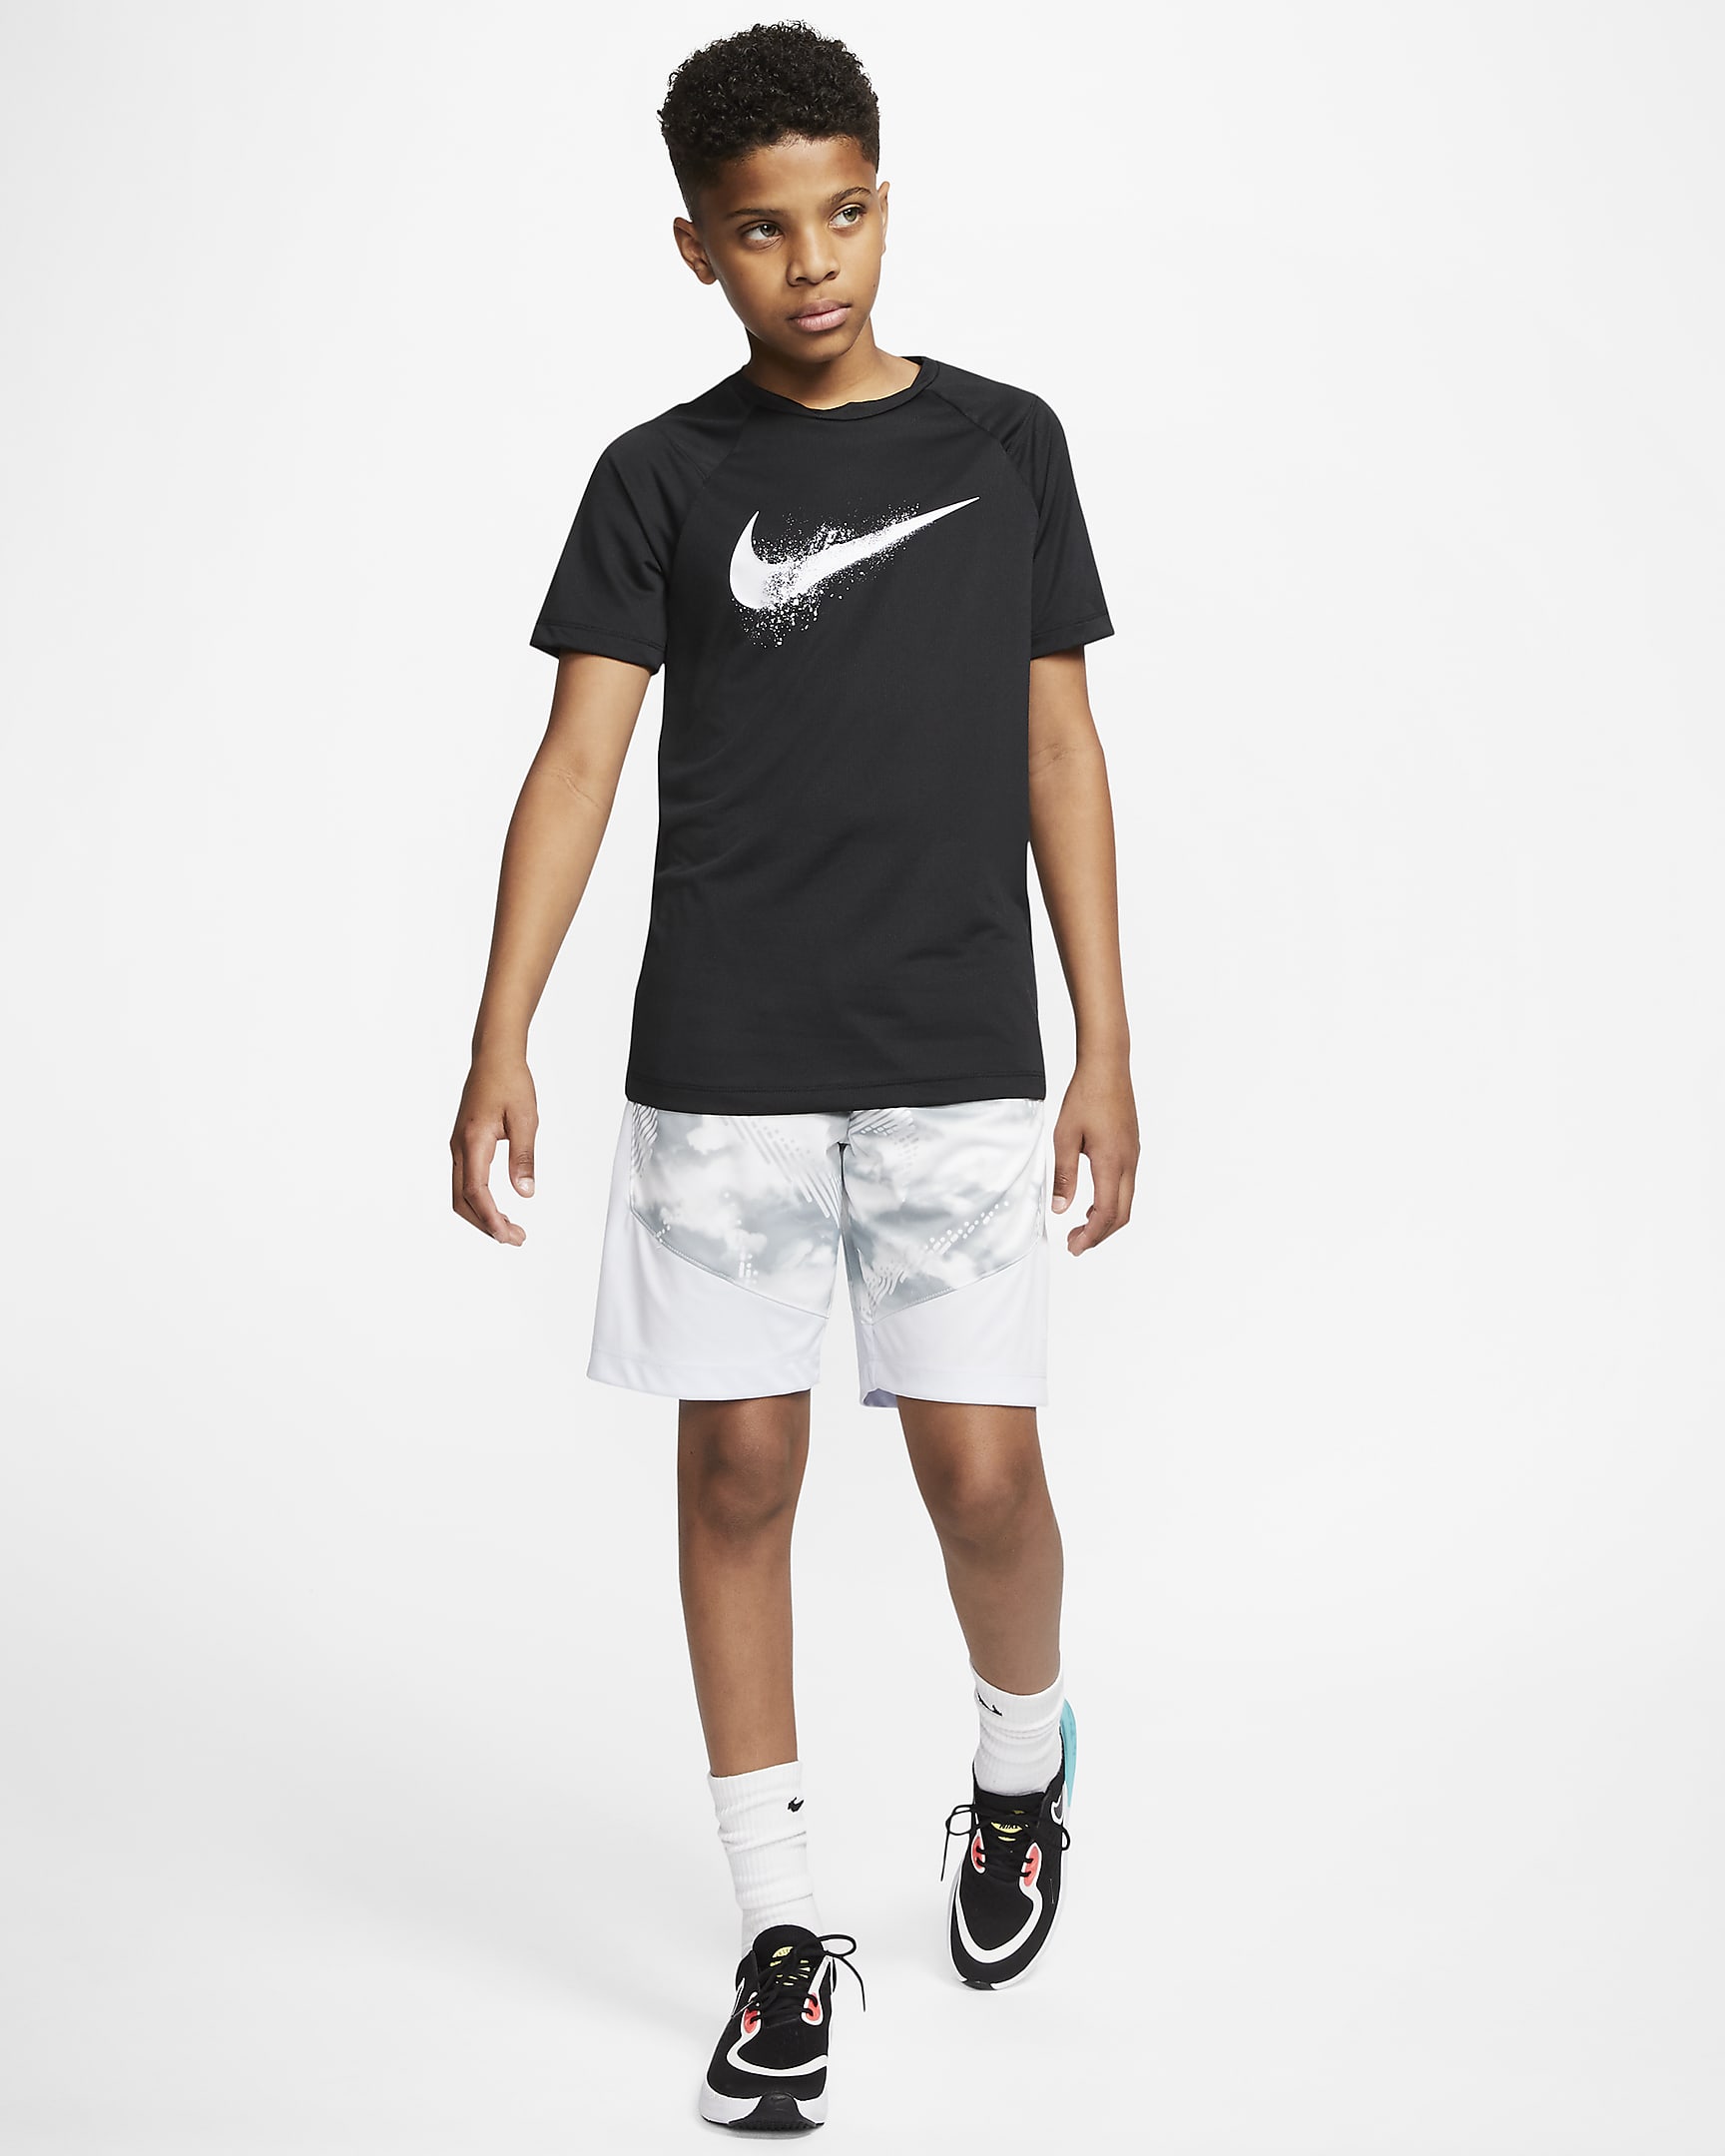 Nike Older Kids' (Boys') Short-Sleeve Graphic Training Top. Nike IN